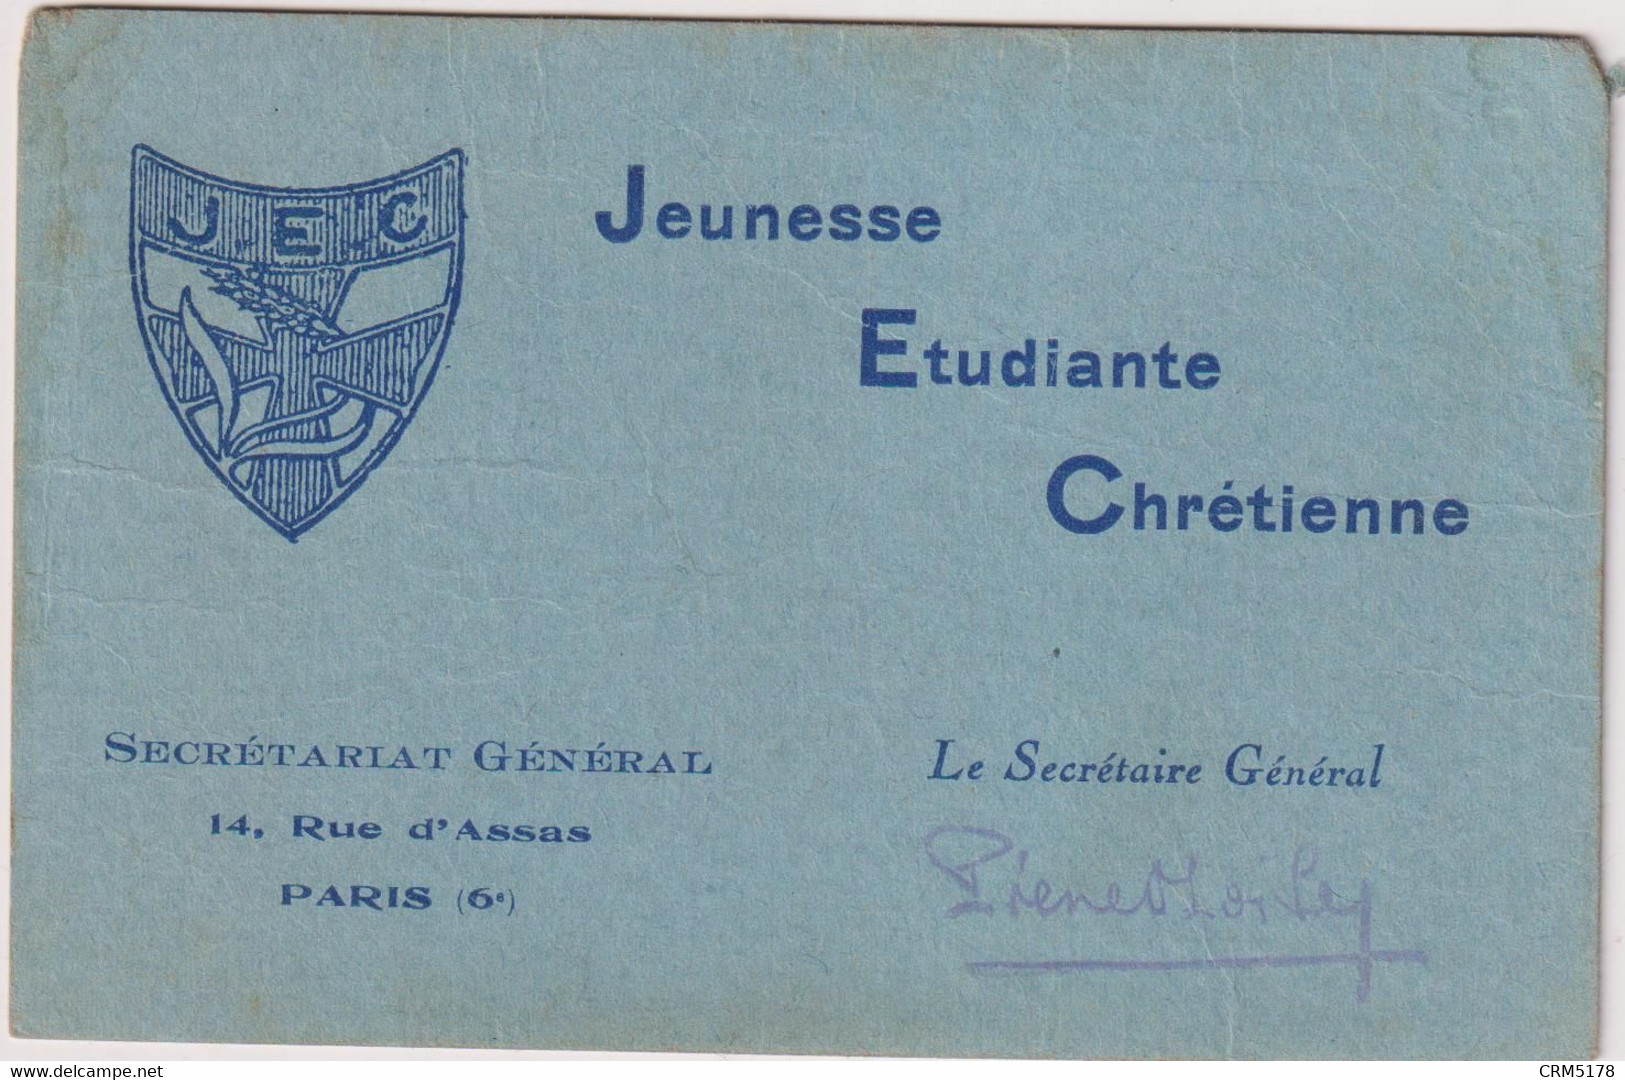 CARTE DE MEMBRE-JEUNESSE ETUDIANTE CHRETIENNE-LYCEE D'ORAN-Vignette J.E.C.cachet - Lidmaatschapskaarten